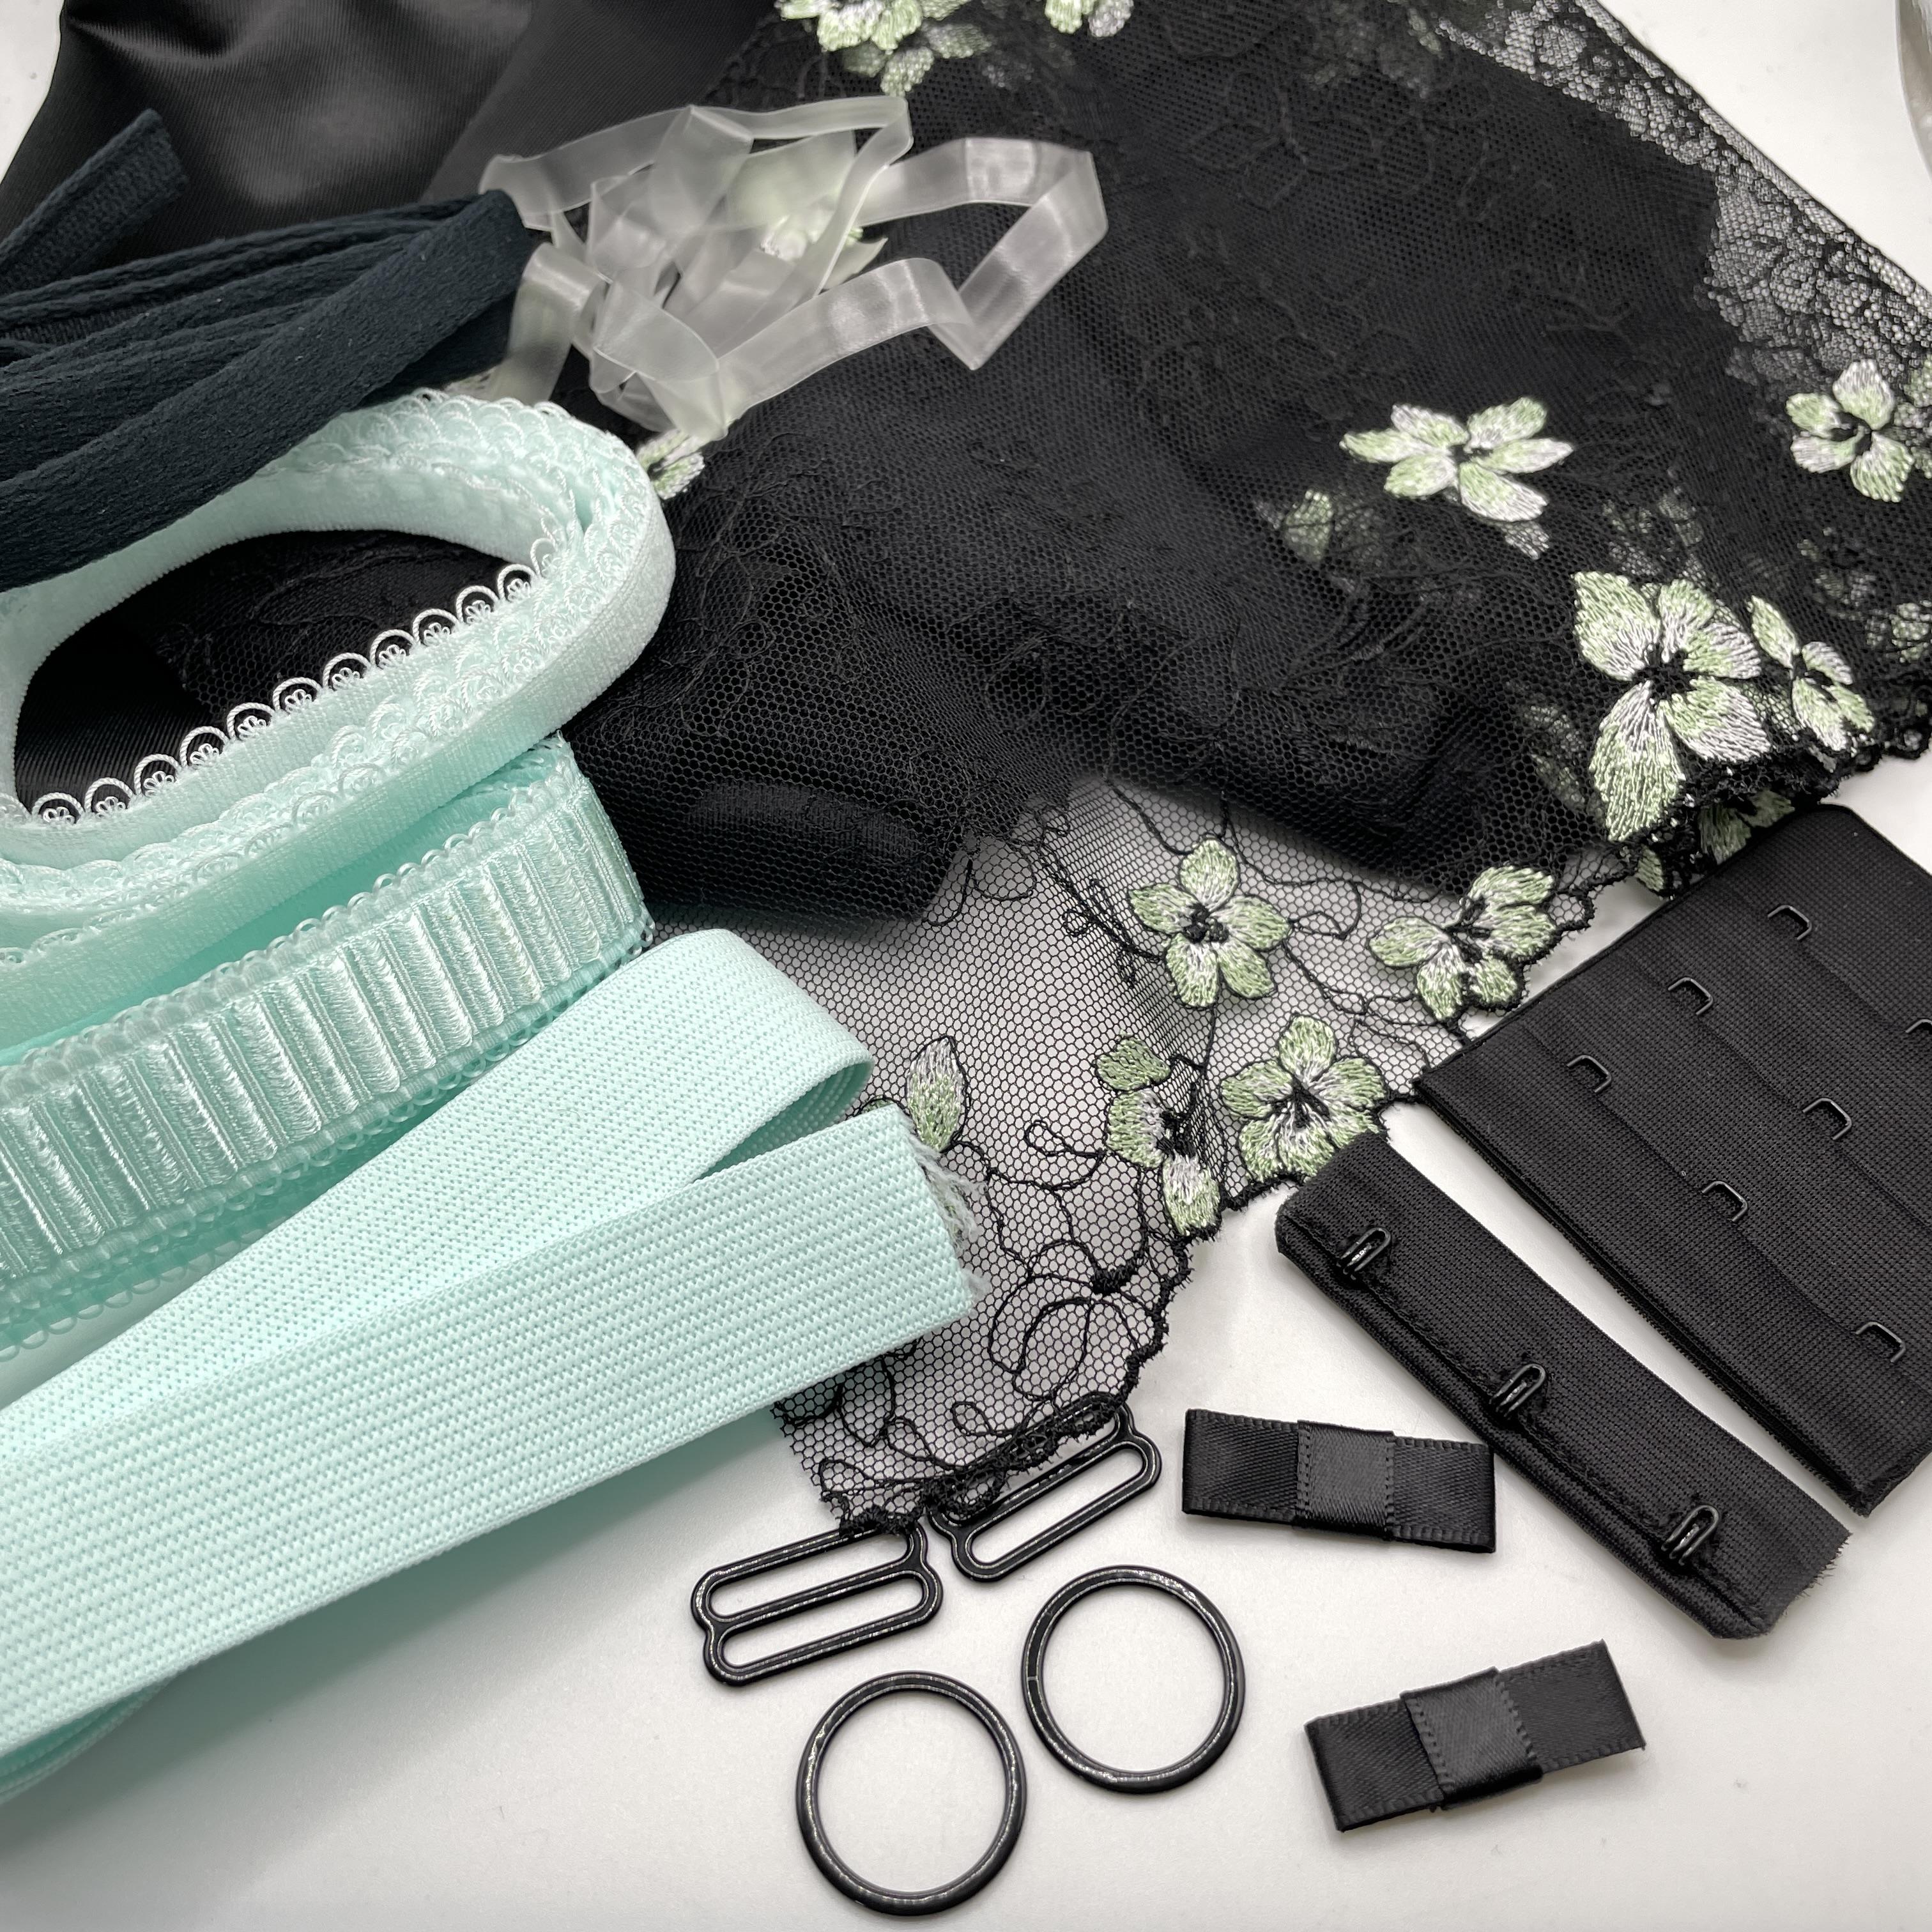 Black Beauty Bra Kit, Duoplex & Lace